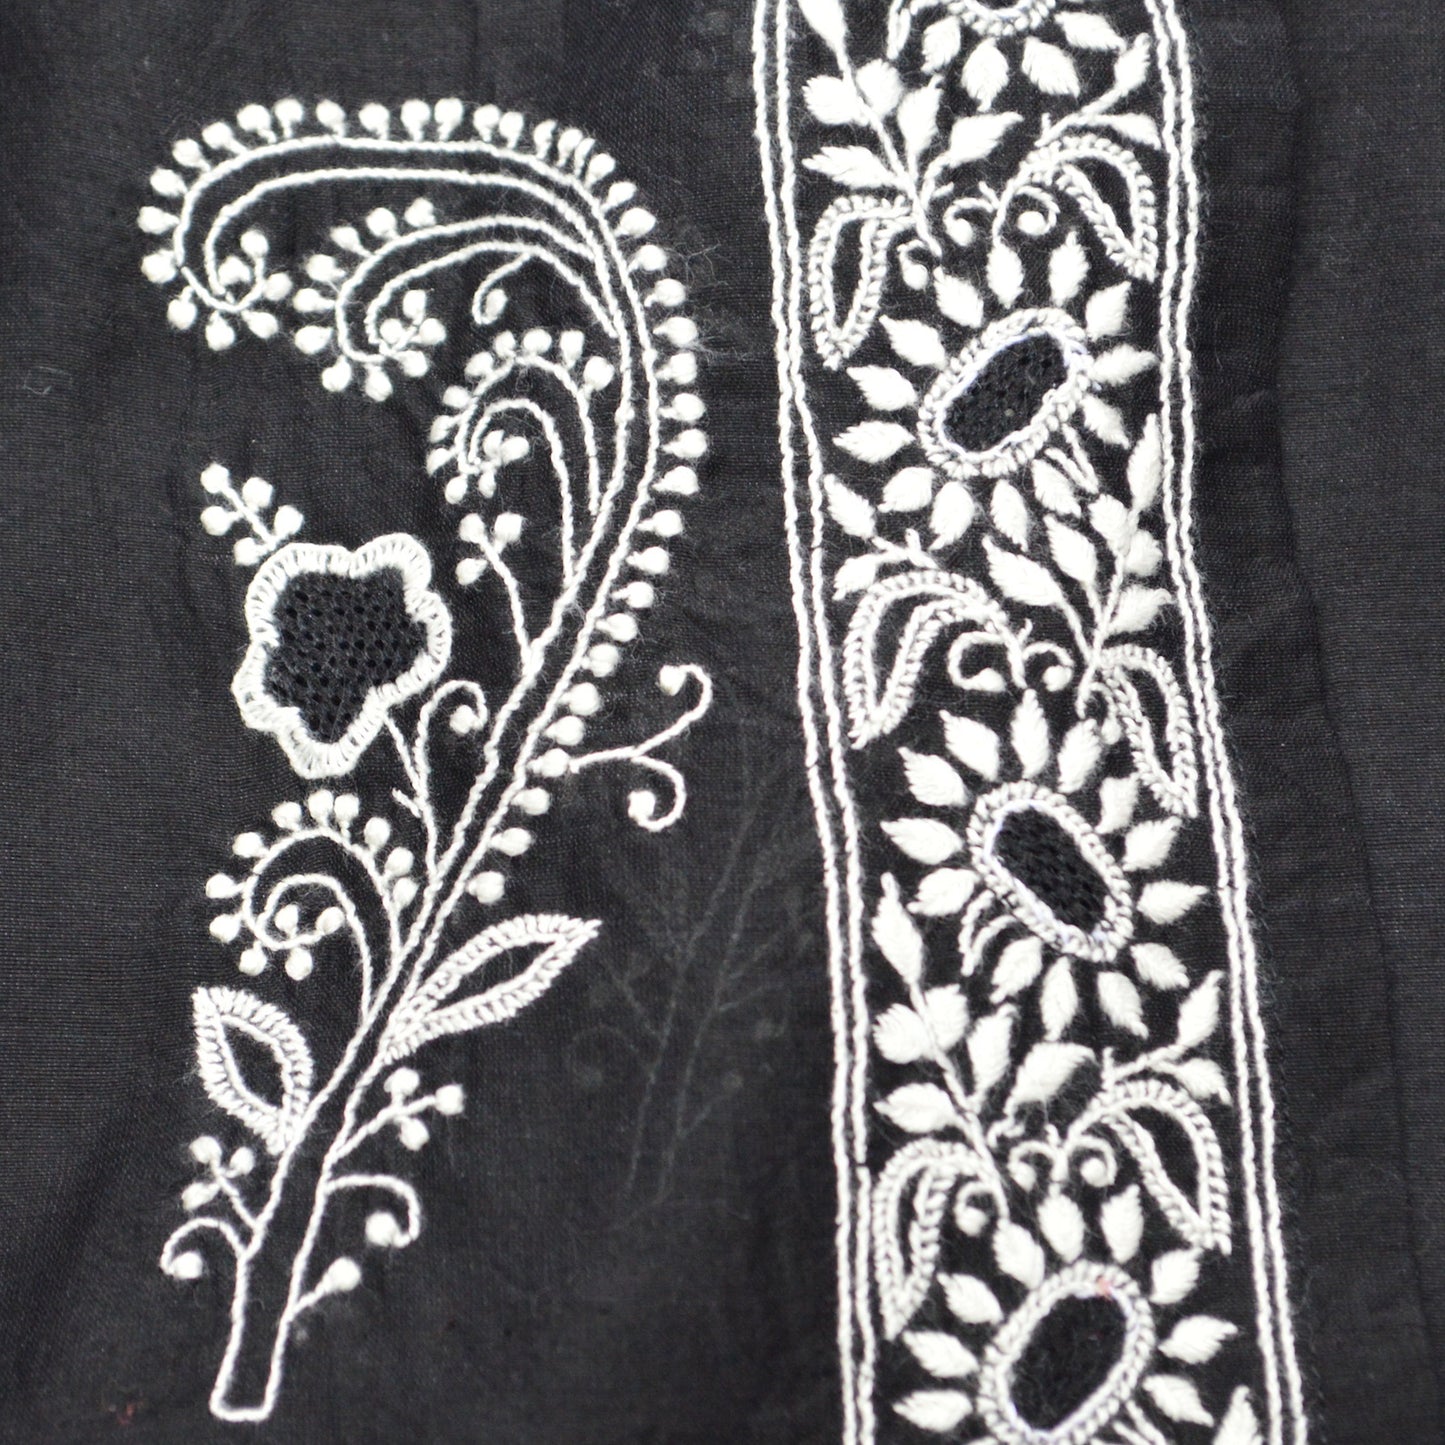 India, Bhairvis Chikan / Mamta Varma, Embroidery